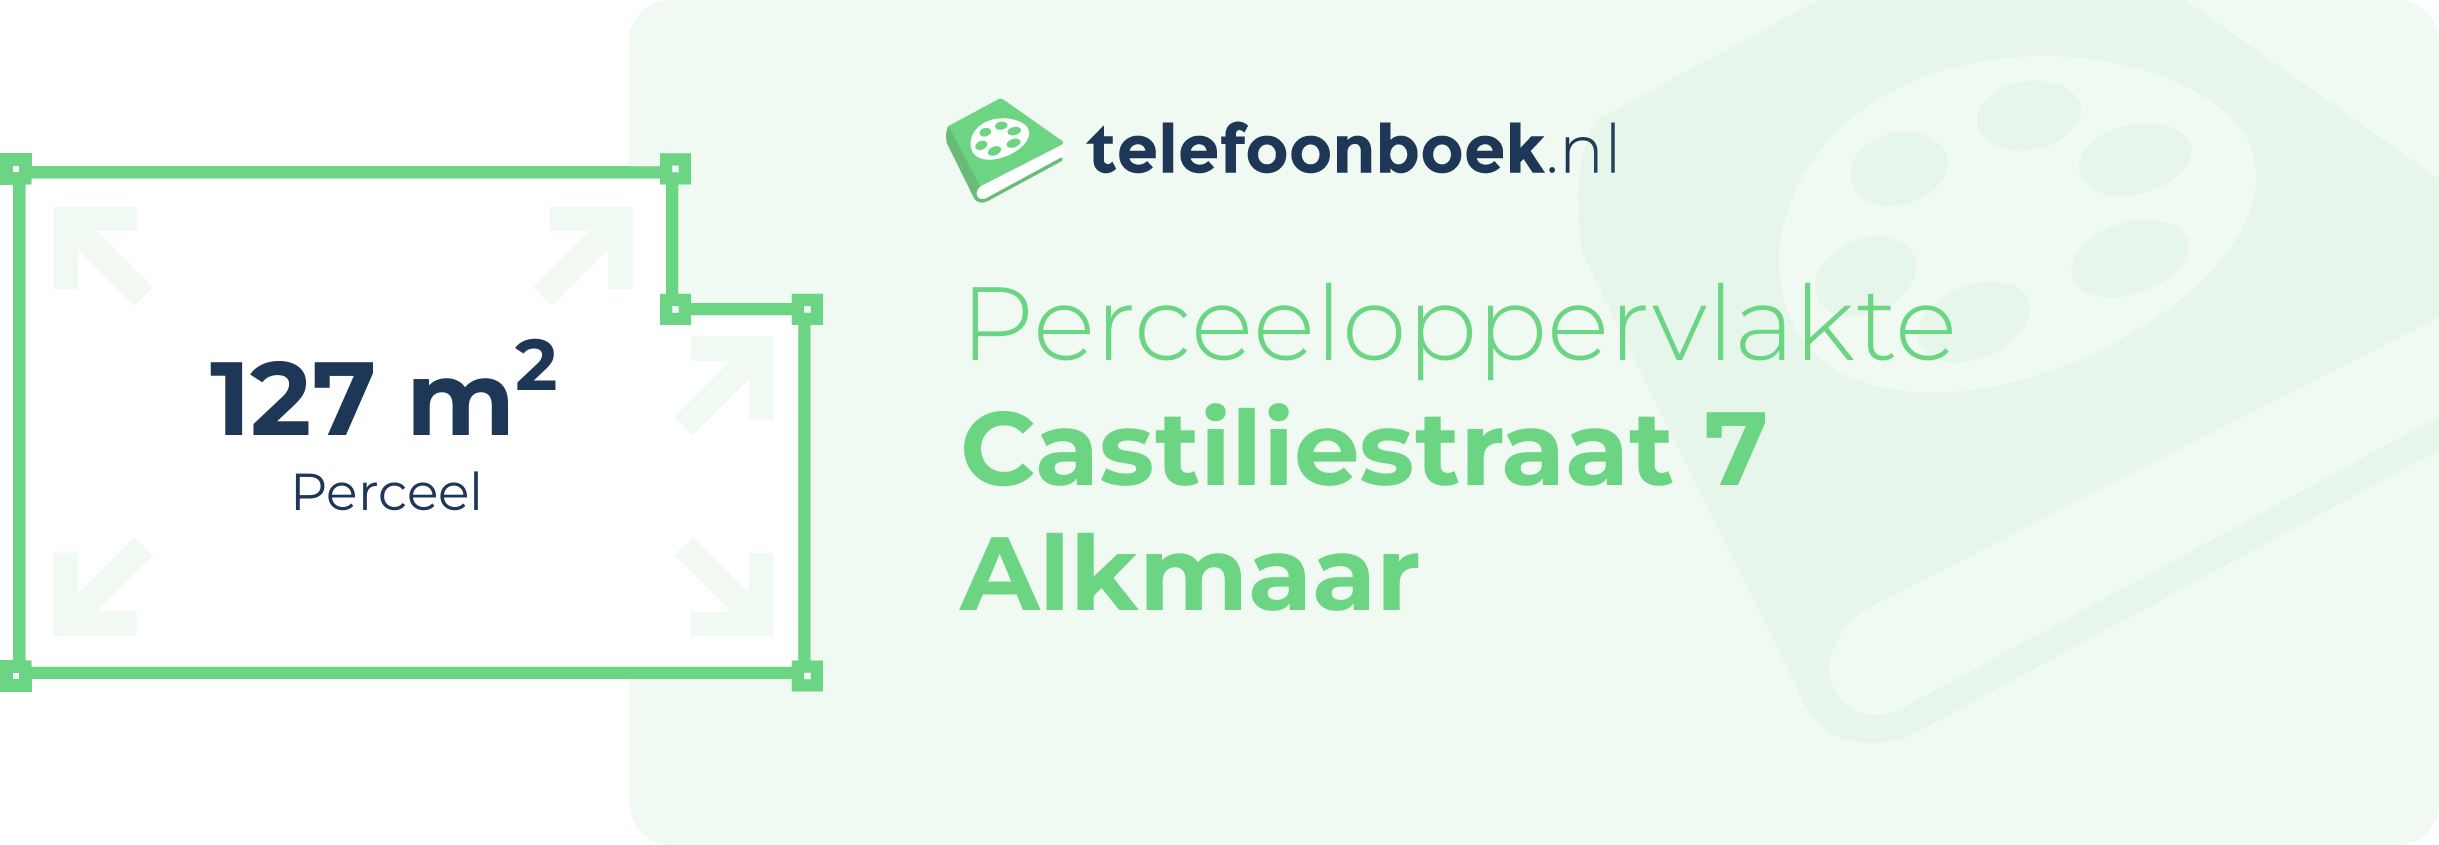 Perceeloppervlakte Castiliestraat 7 Alkmaar